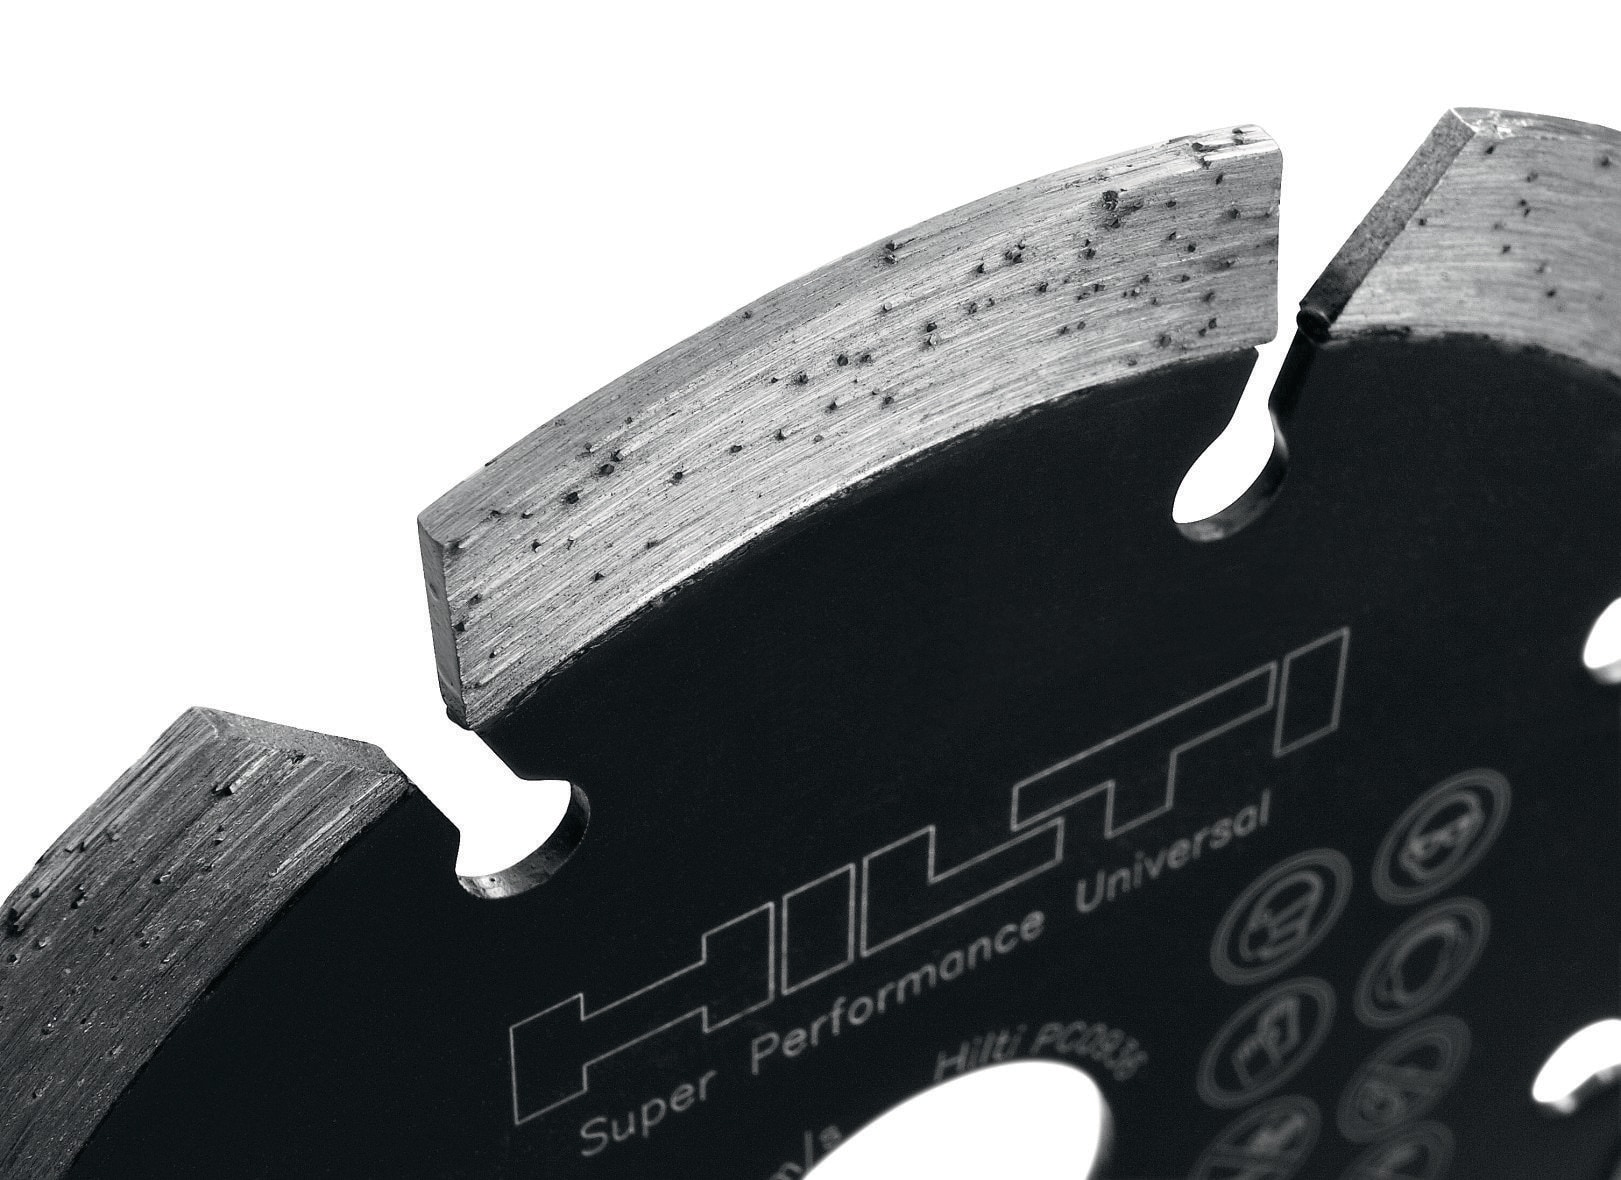 22 Super Performance X Hilti Hilti Universal 305 Mm  Equidist Blade Cutting Disc 305 